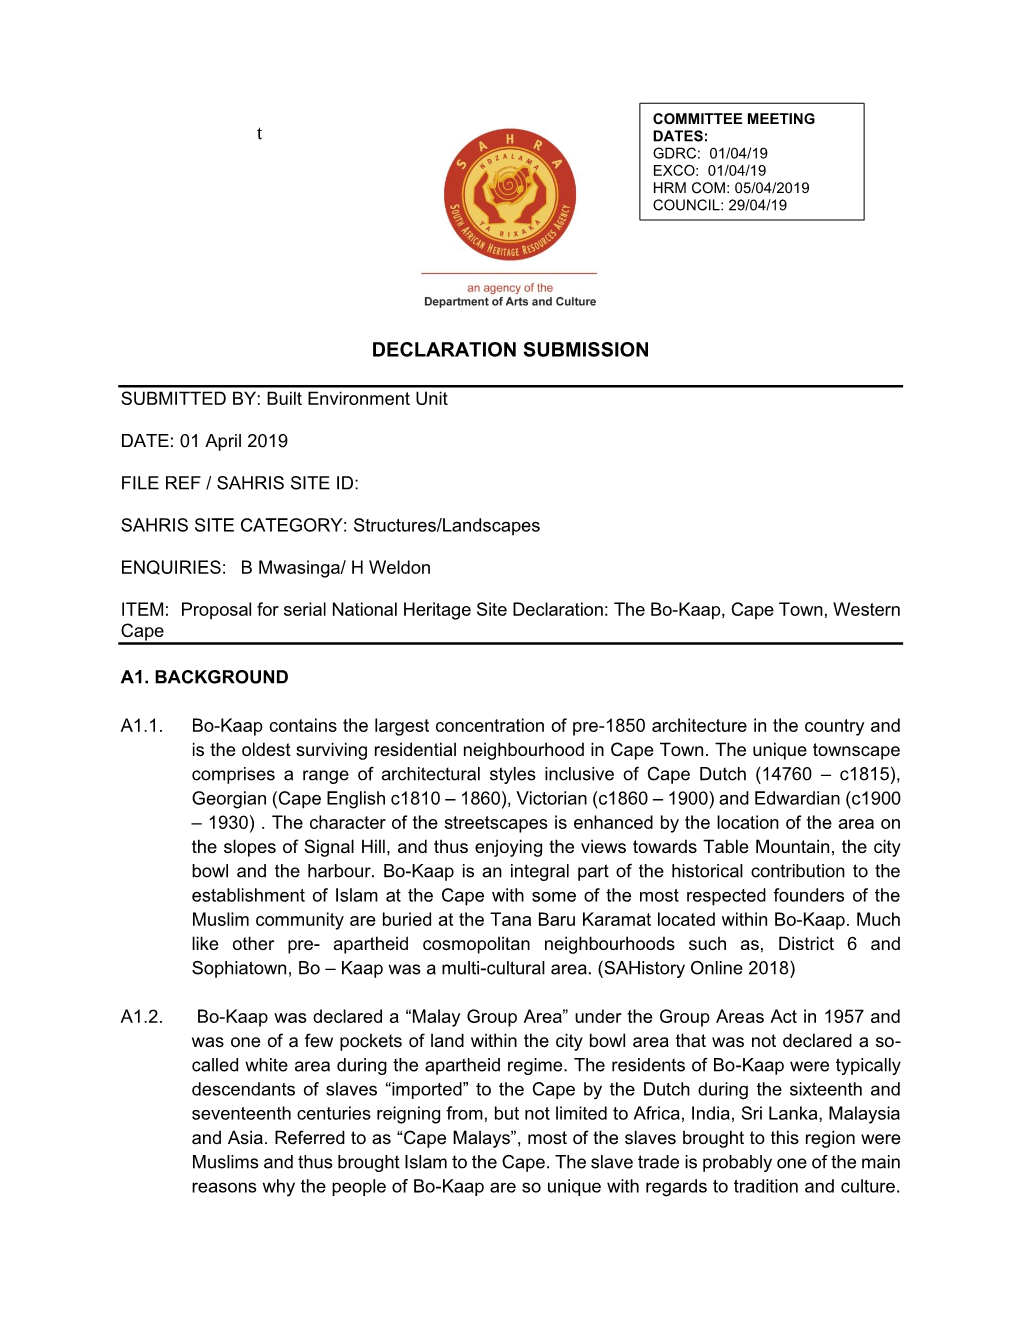 GDRC Declaration Submission -Bo-Kaap .Pdf